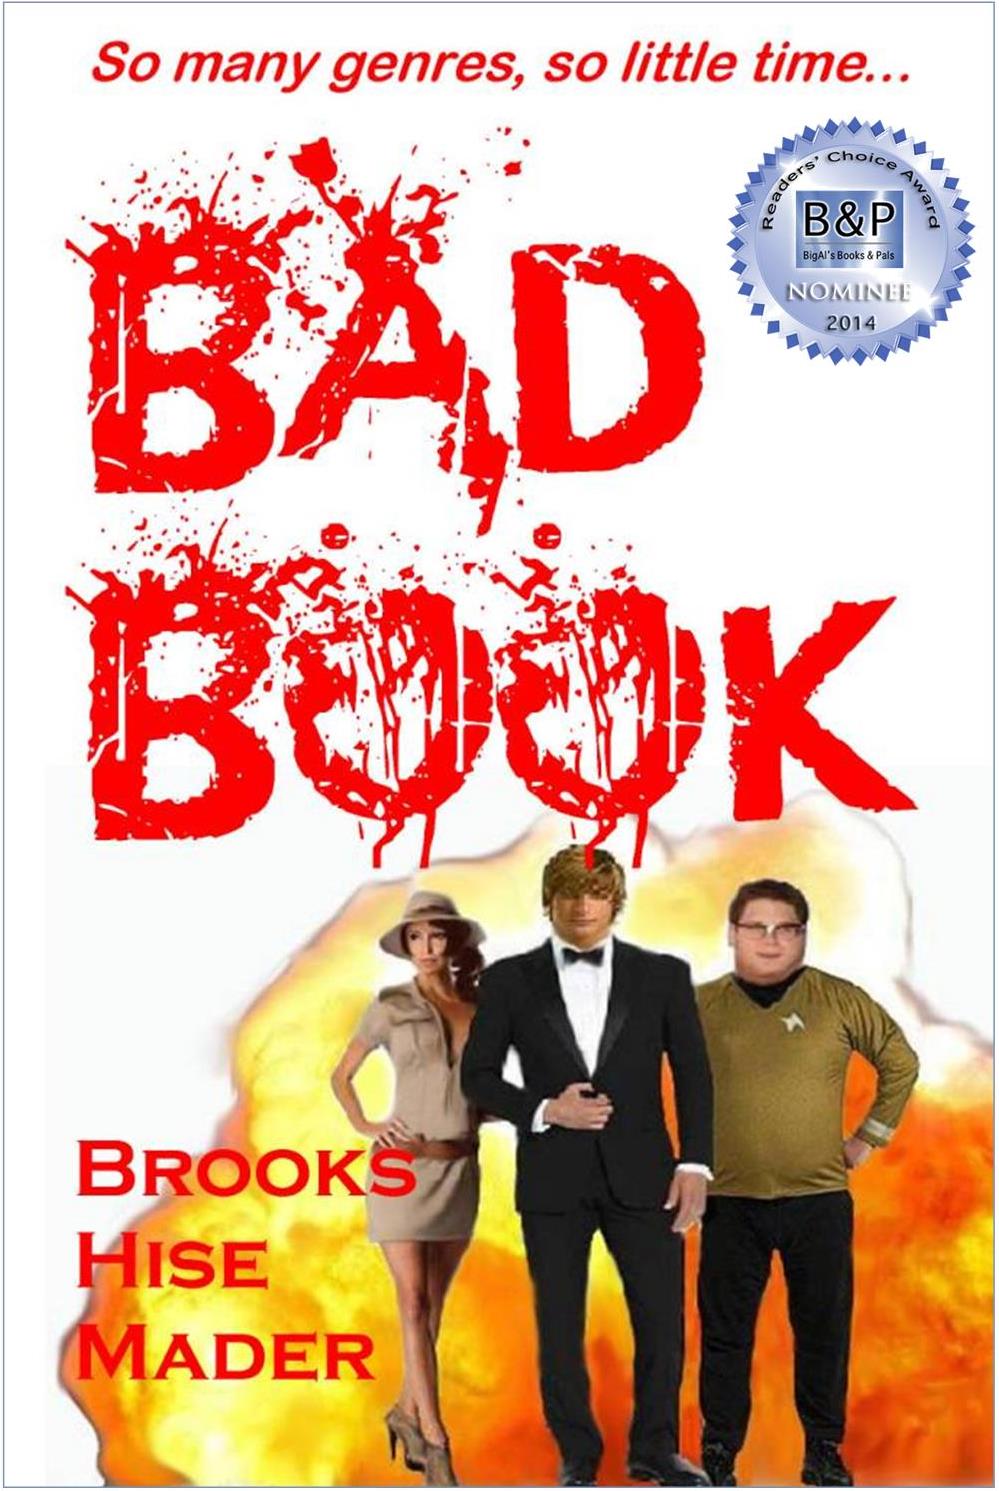 BAD BOOK